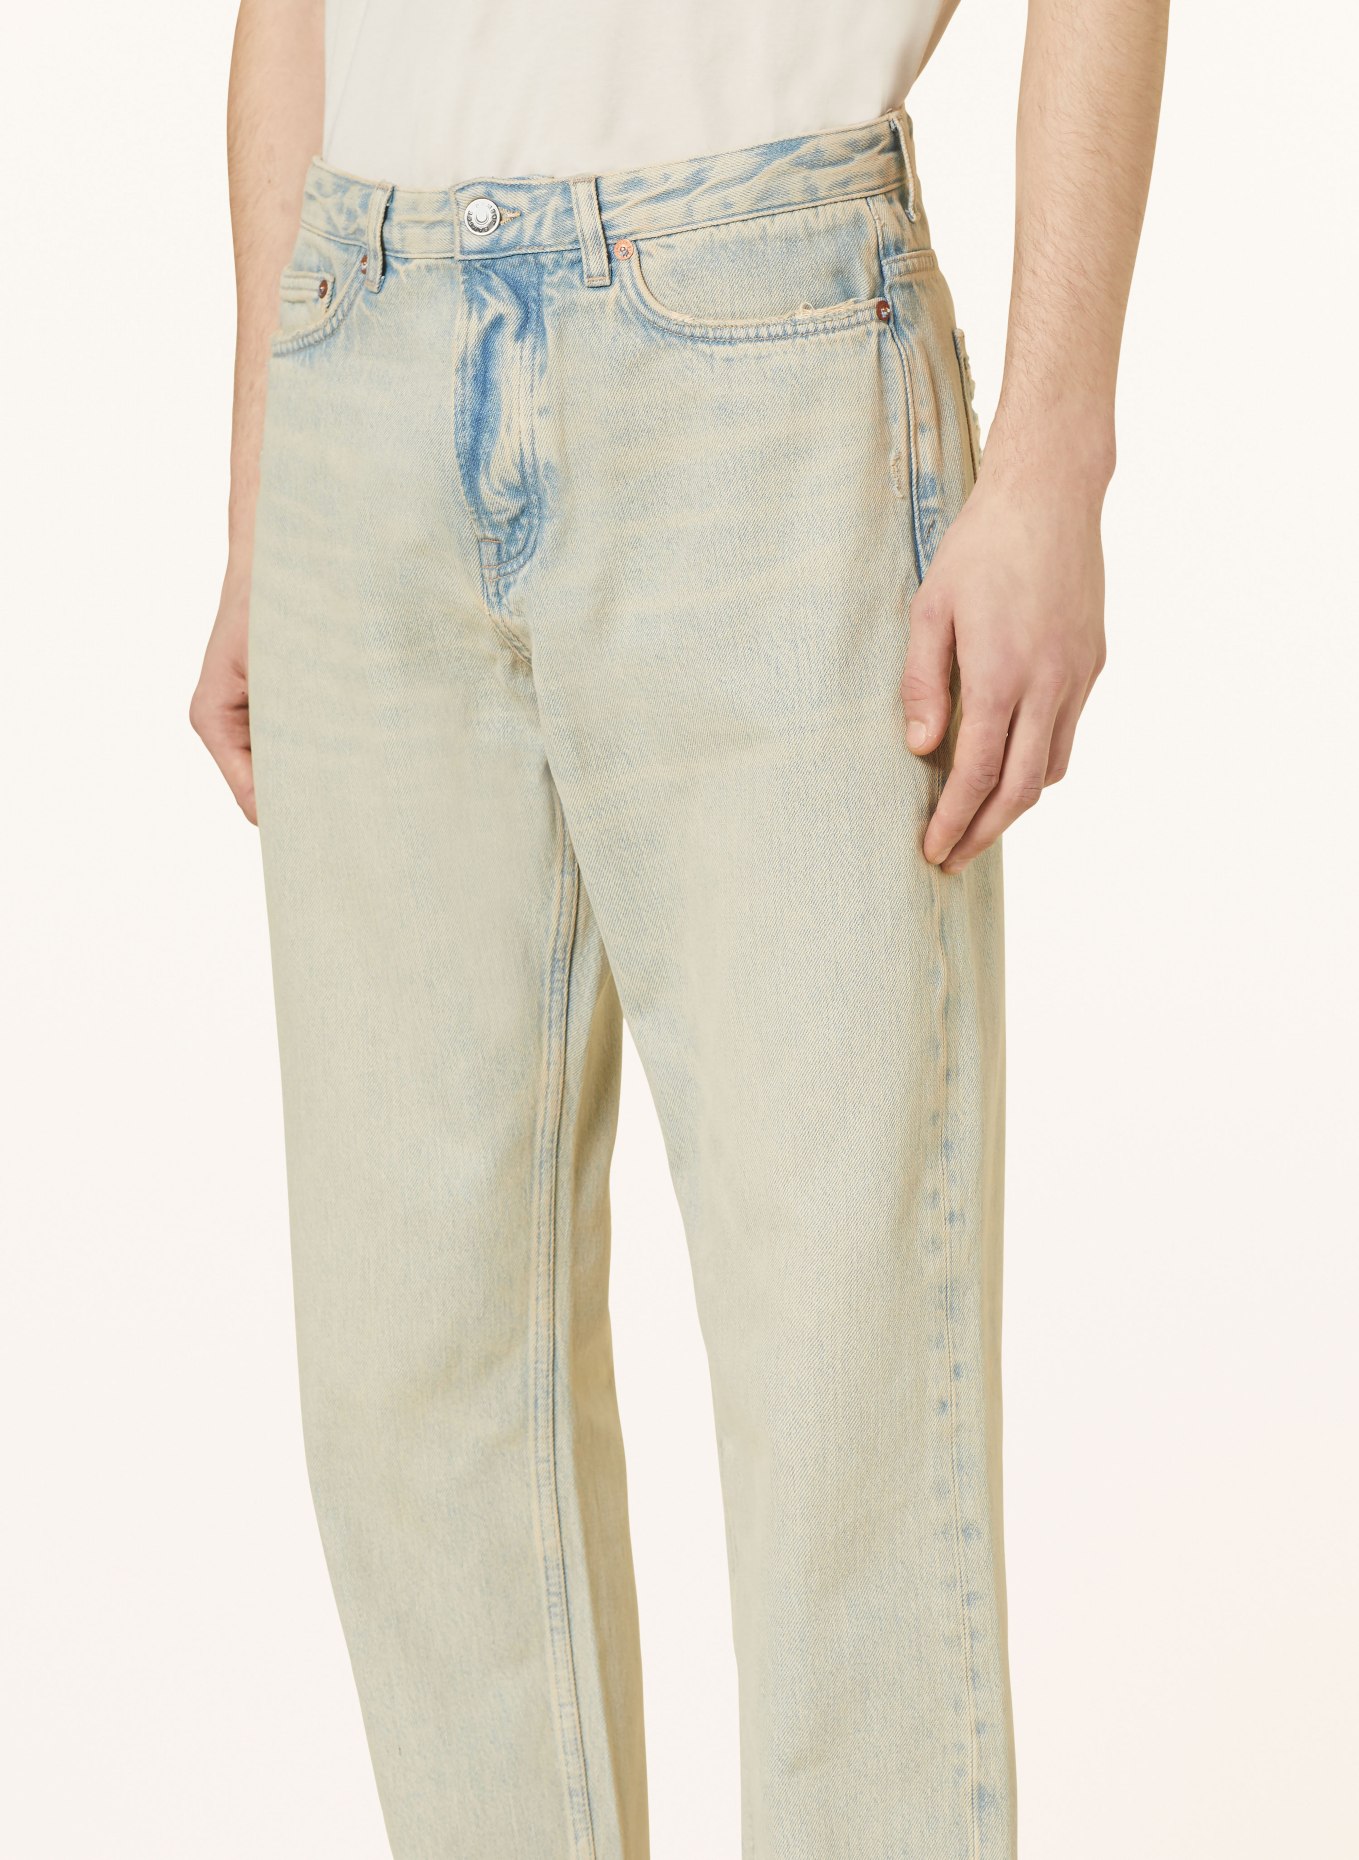 SAMSØE  SAMSØE Jeans EDDIE Regular Fit, Farbe: CLR001370 Khaki dust (Bild 5)